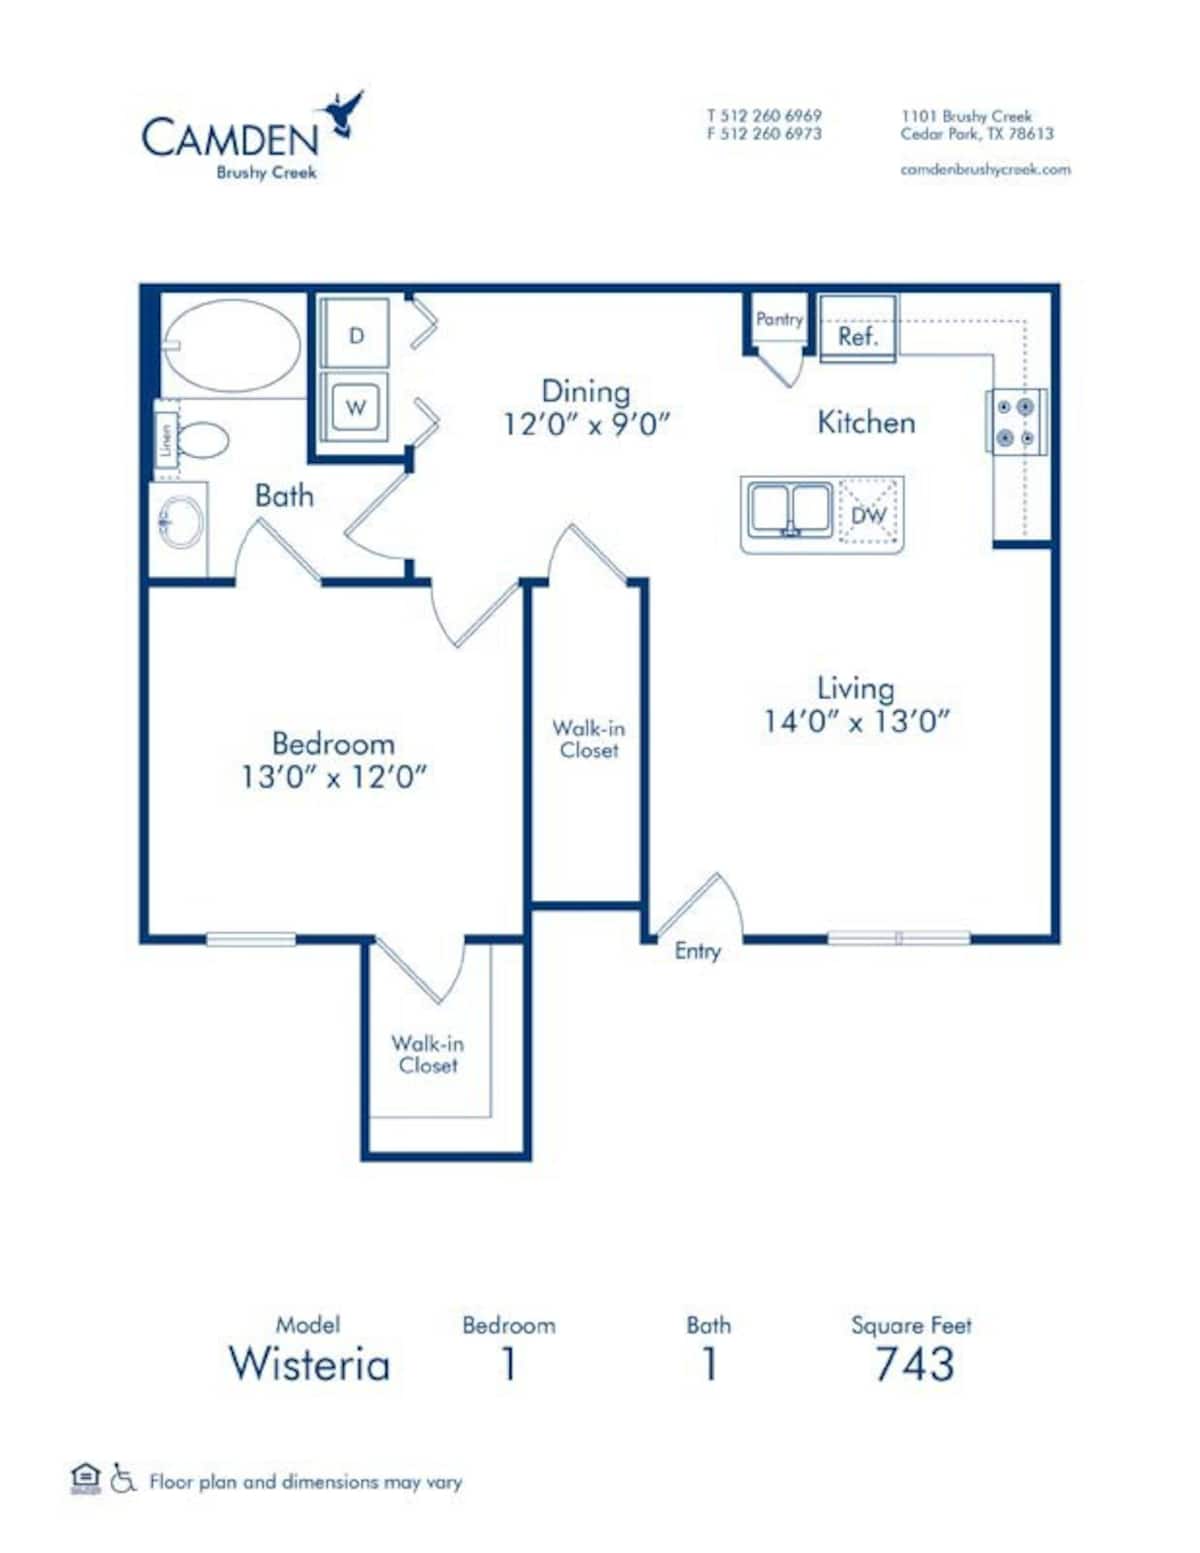 Floorplan diagram for Wisteria, showing 1 bedroom